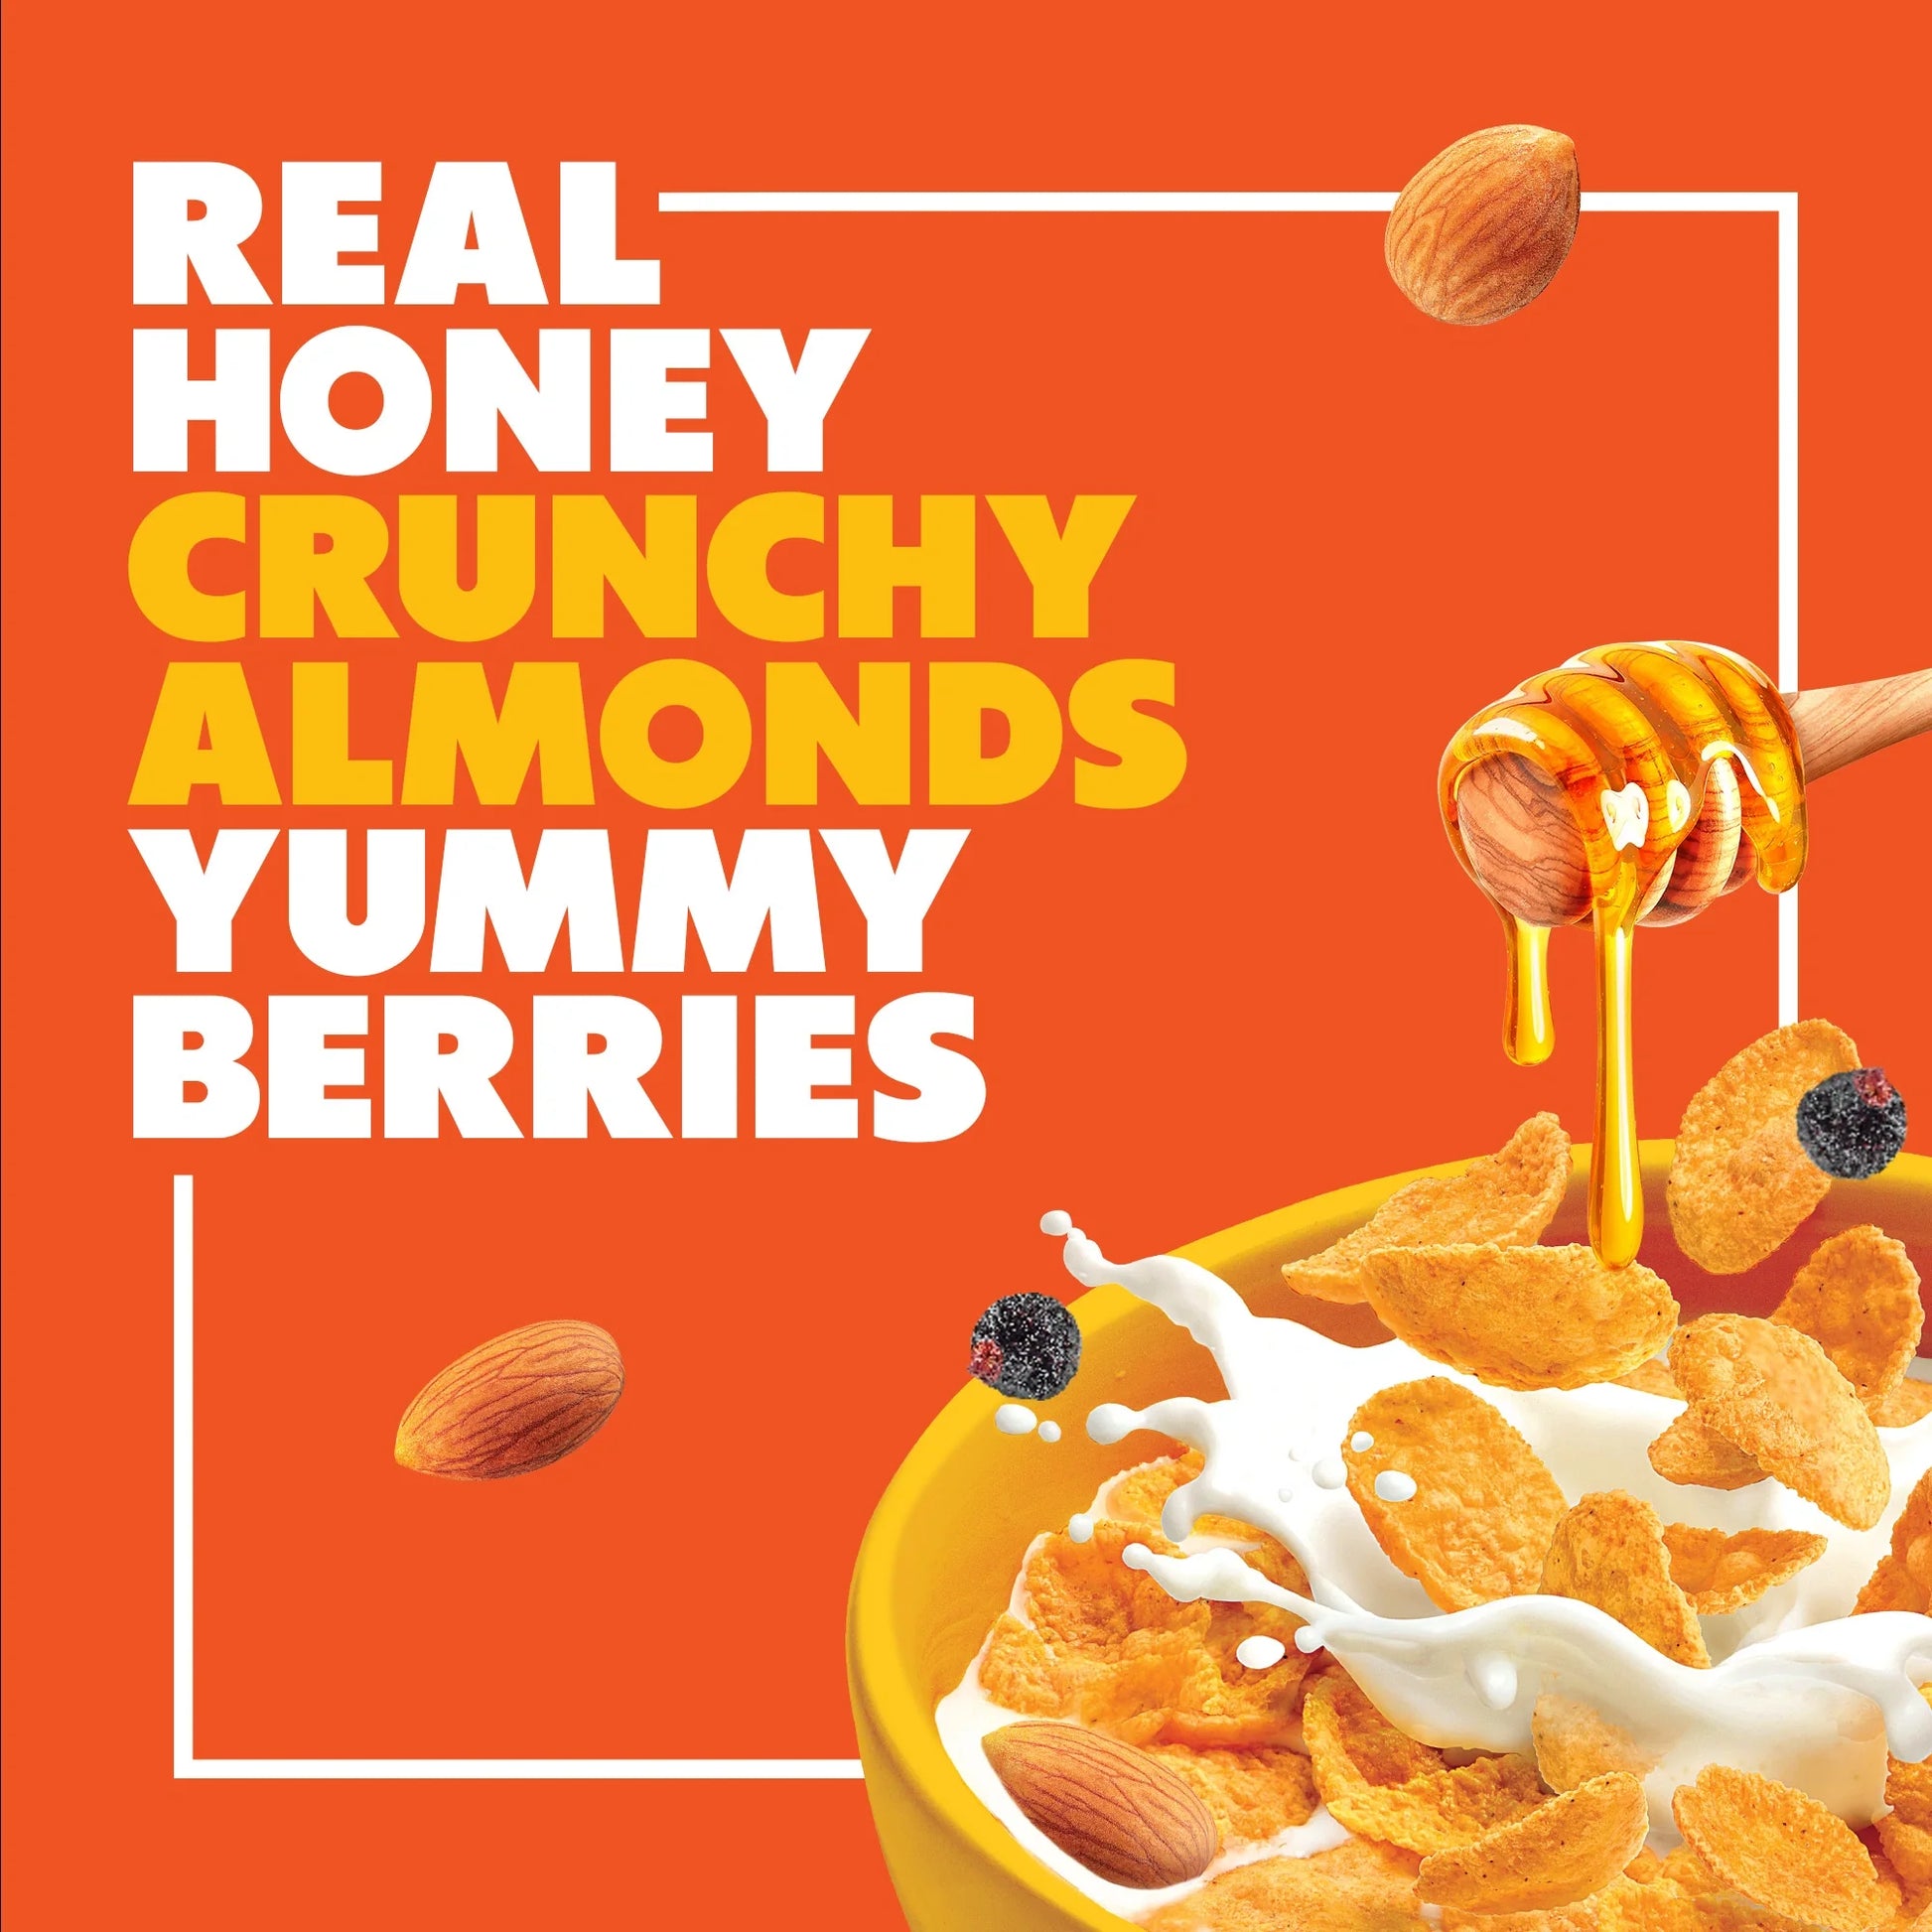 Go Free® Honey Nut Corn Flakes, Gluten-Free Cereal